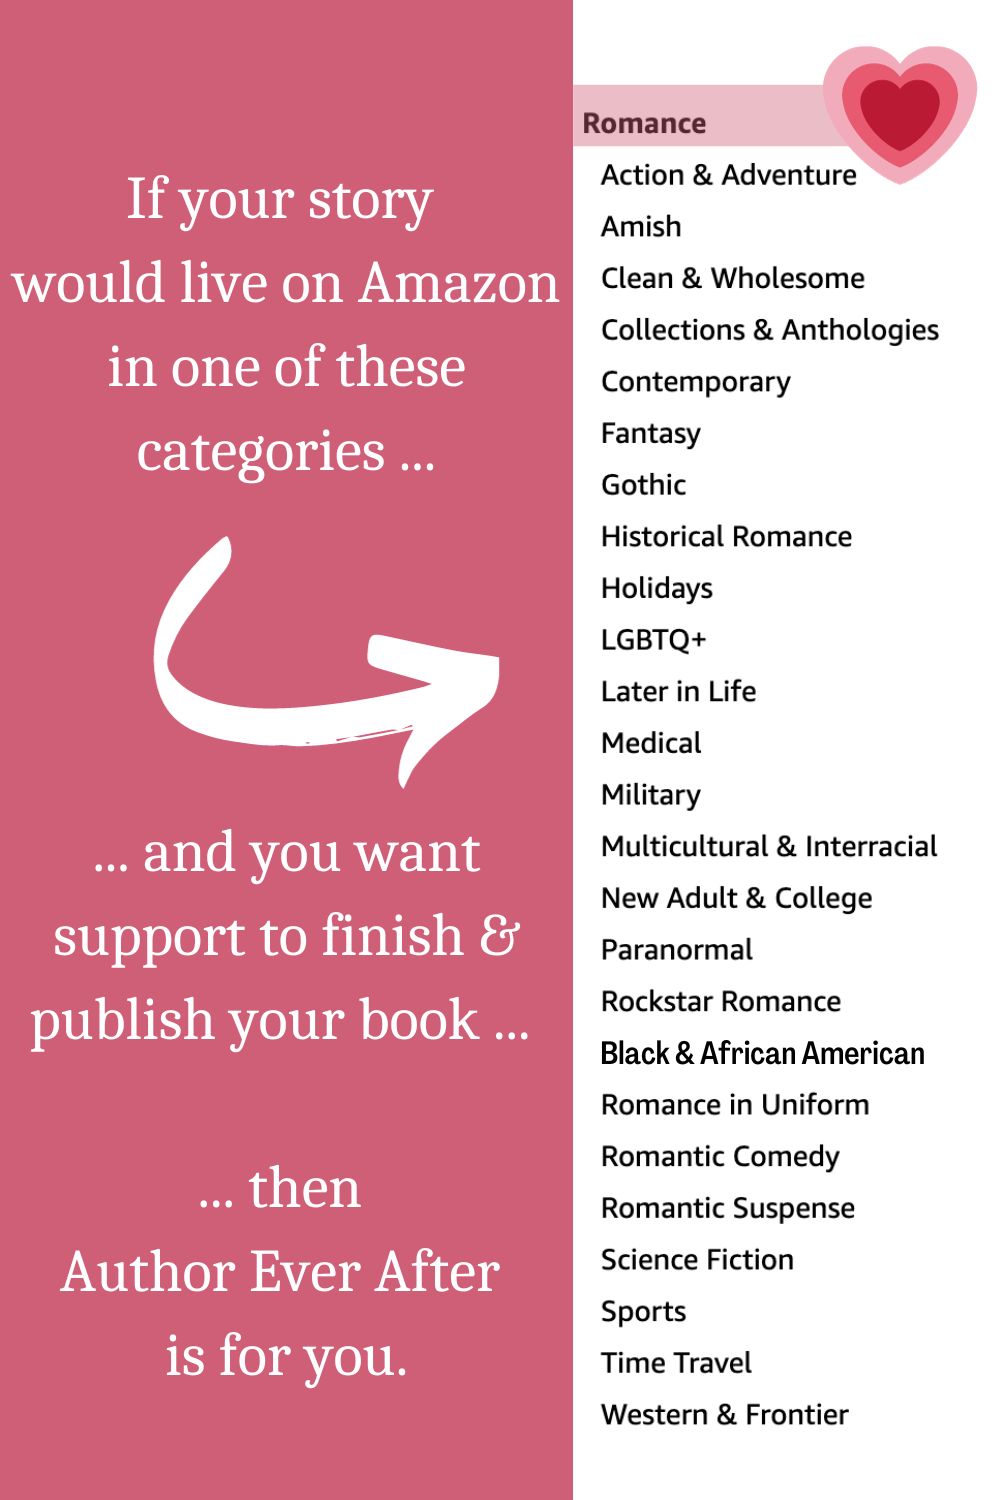 screenshot of the romance subcategories on Amazon